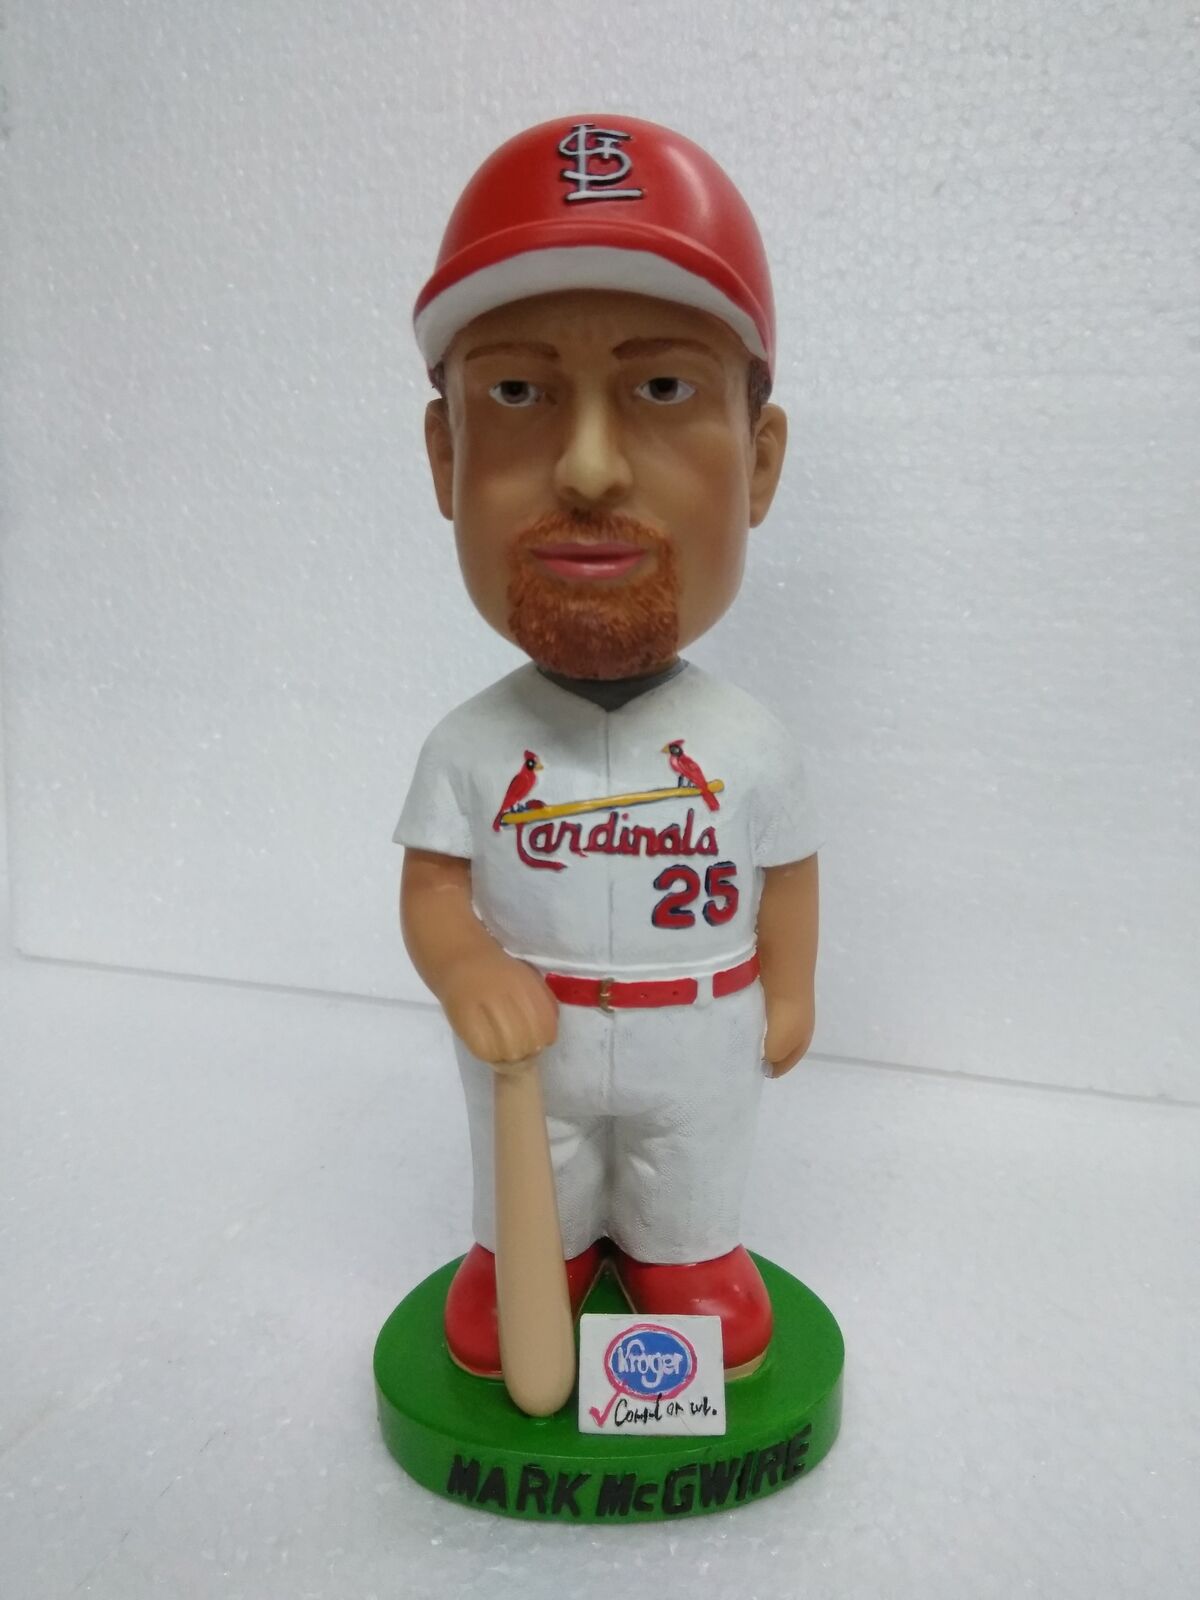 Mark Mcgwire #23 Cardinals Bobblehead Bobble head